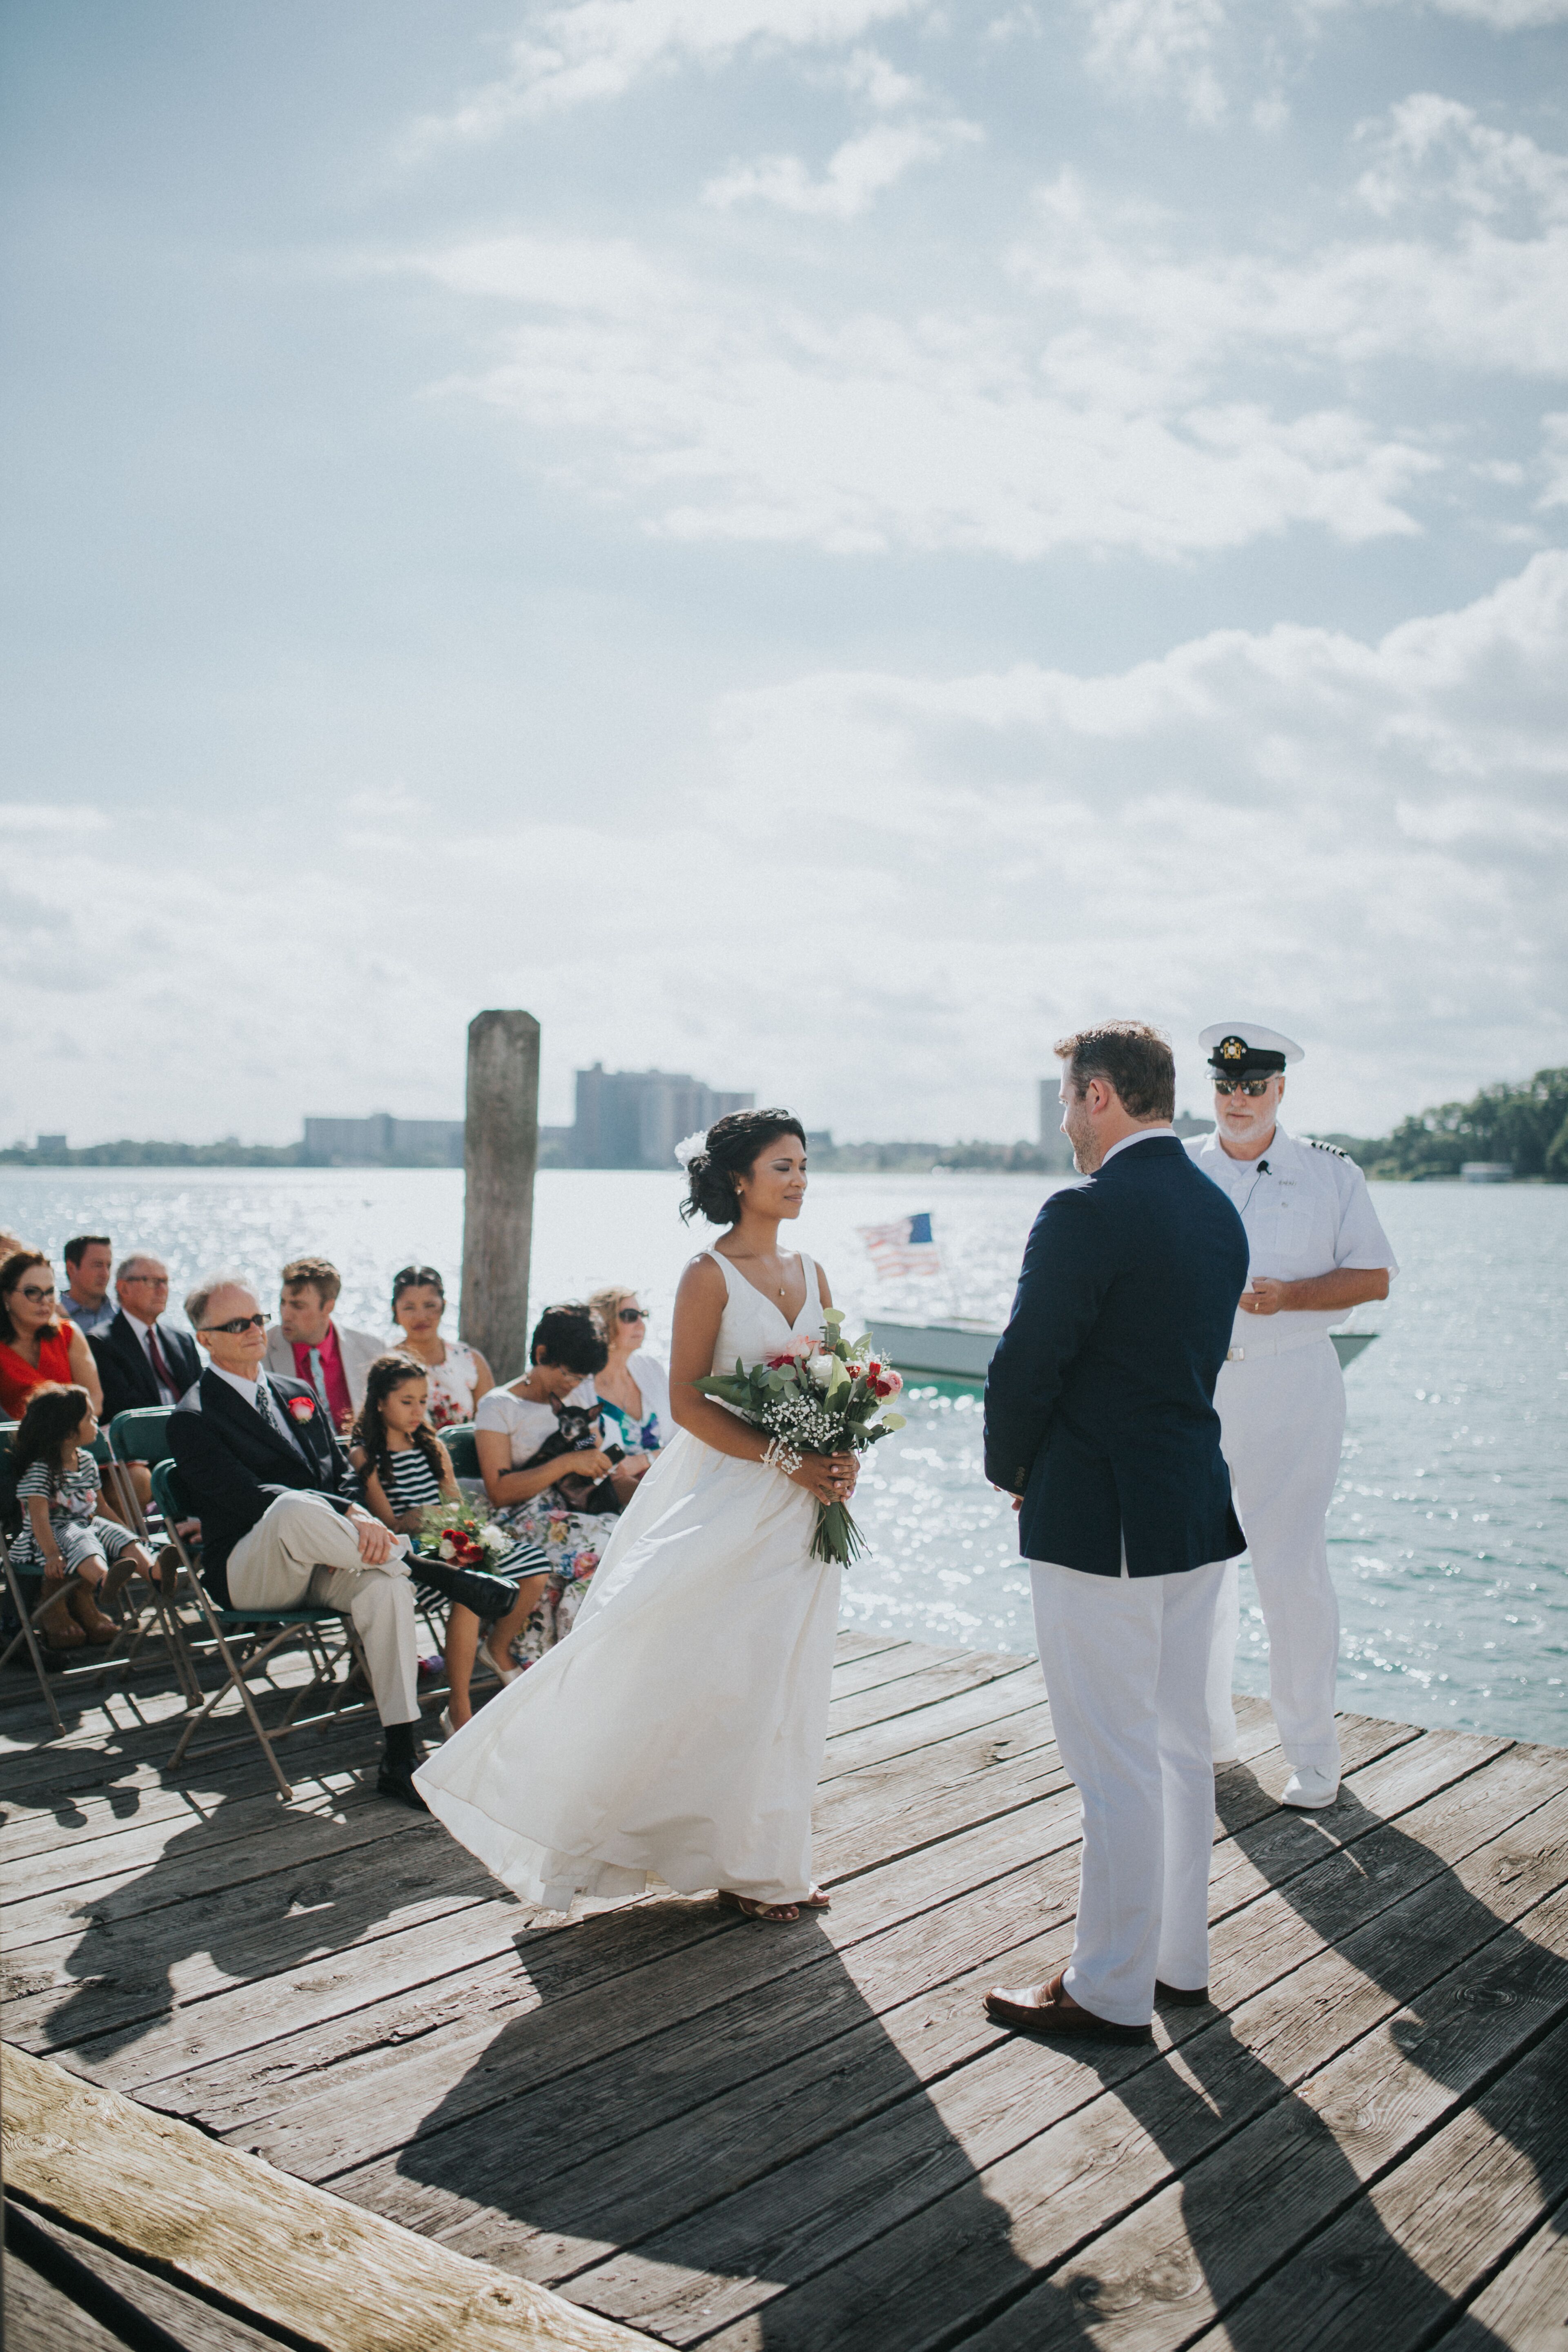 Dress Attire at Nautical-Themed Wedding